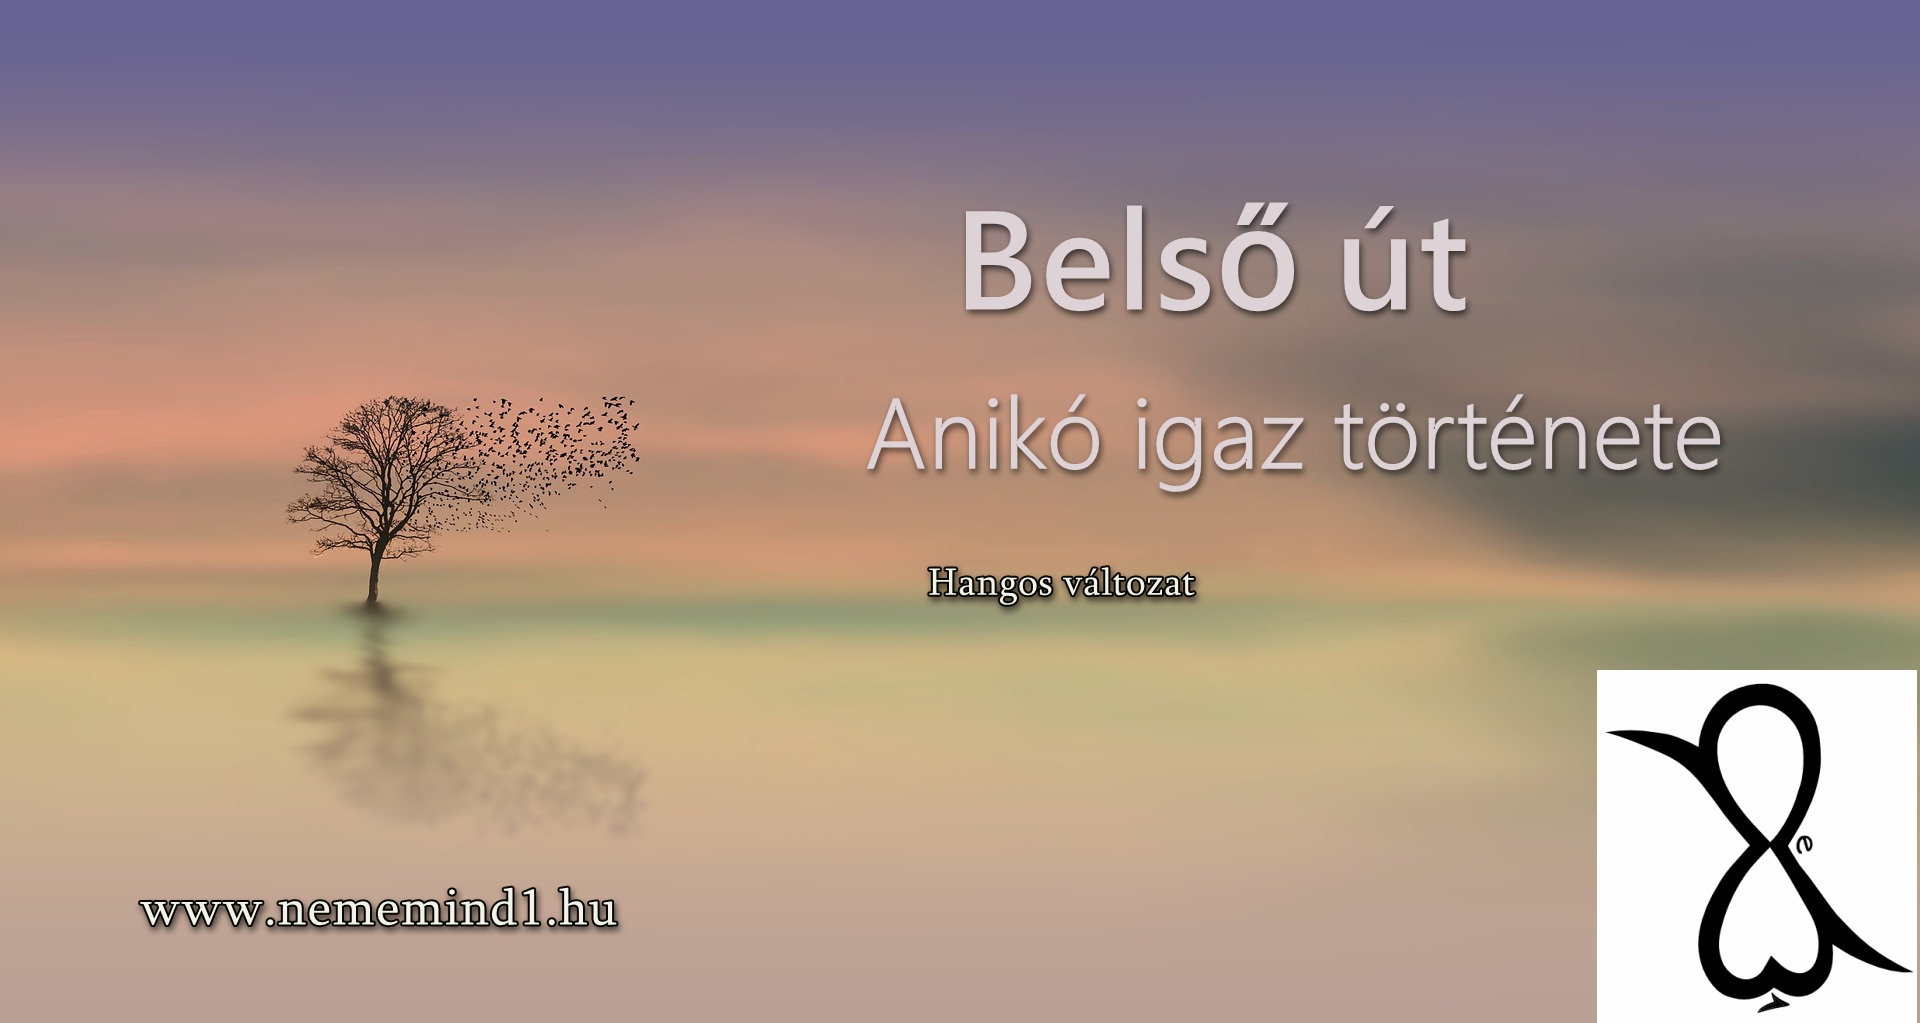 You are currently viewing Hangos igaz történeteink 67, Anikó: Belső út